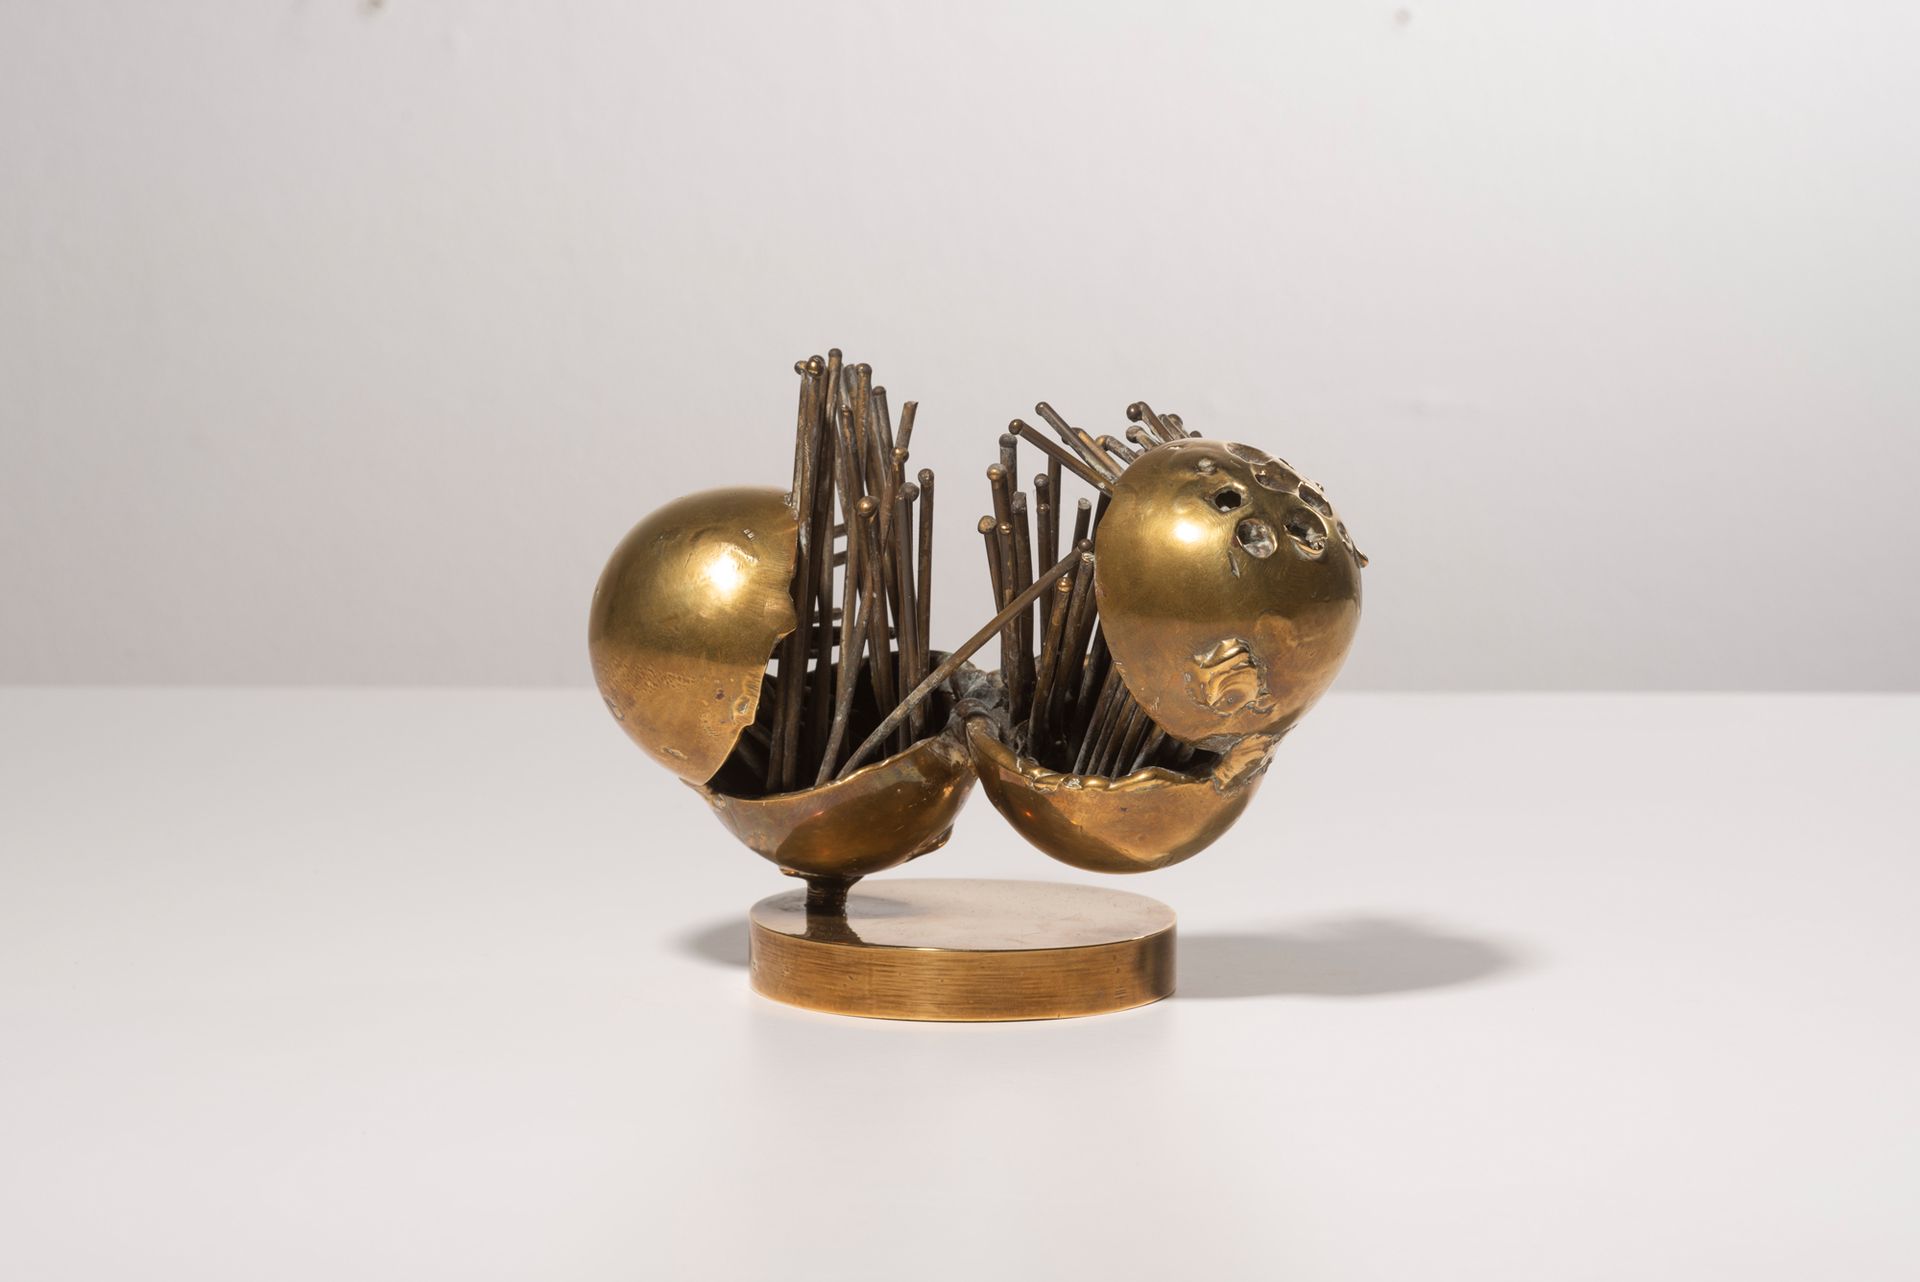 Alberto GUZMAN (1927-2017) 隔断，1967年
焊接的青铜，带有金色的铜锈。
底座上有签名和日期。
Gelast brons met g&hellip;